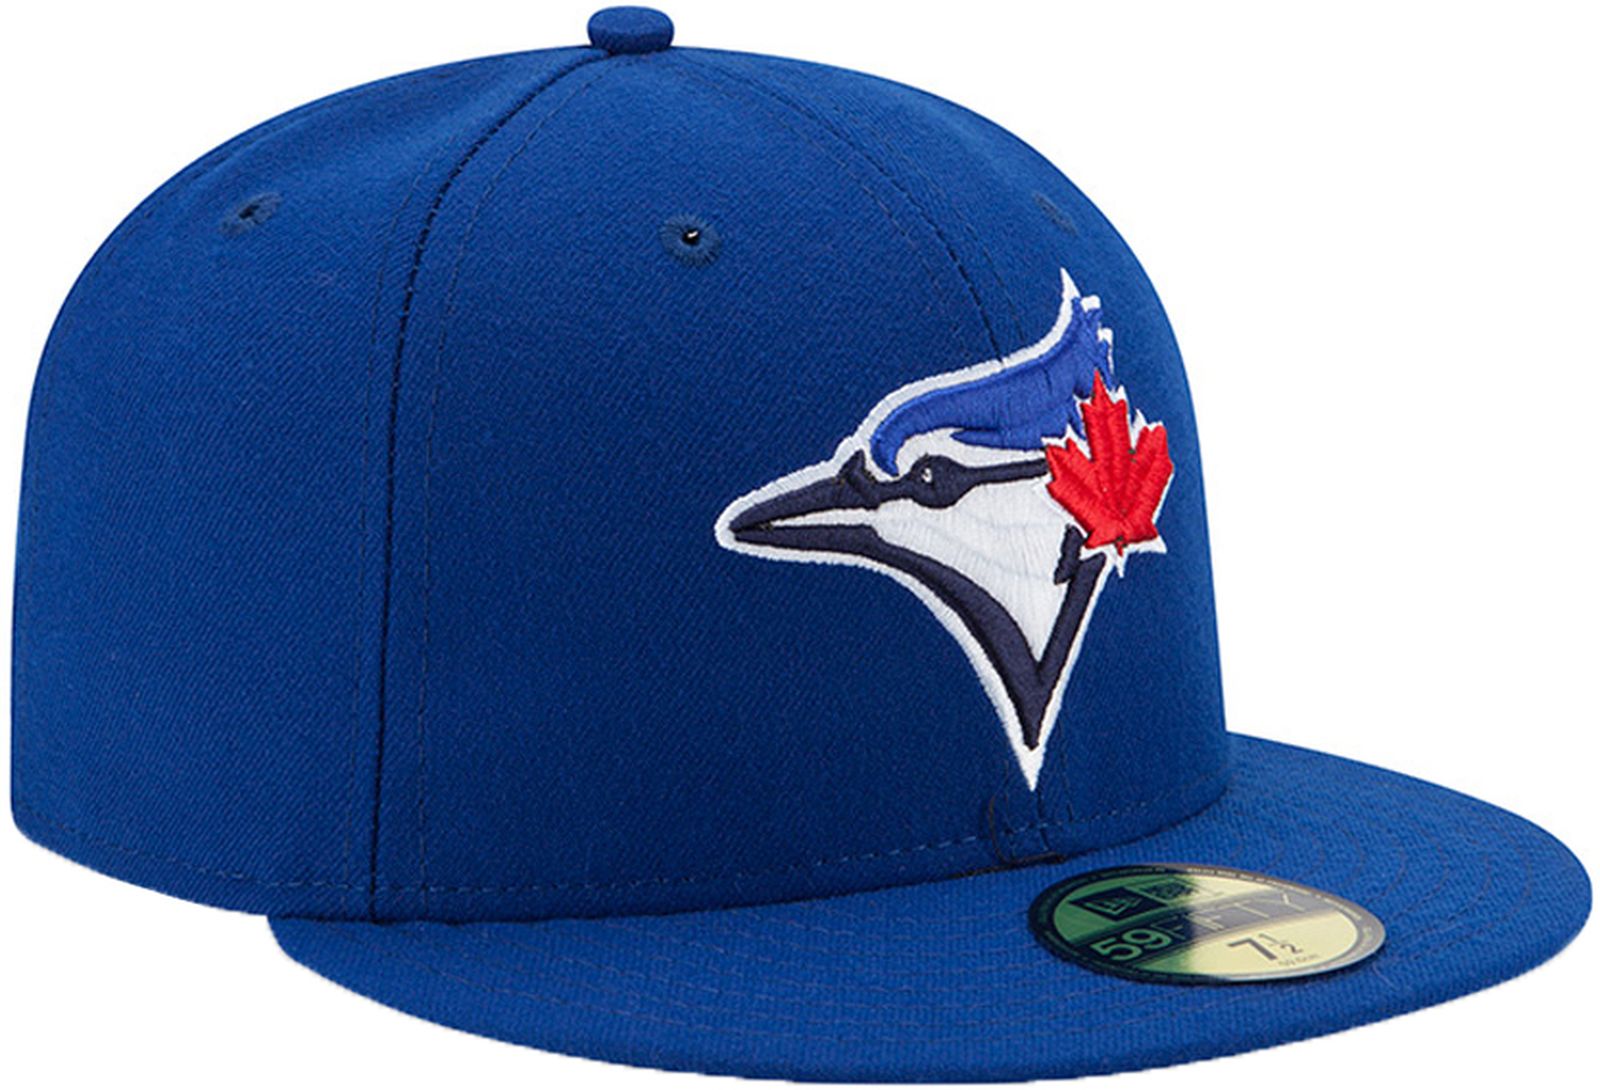 New Era - MLB Toronto Blue Jays Authentic On-Field 59Fifty Cap - blue